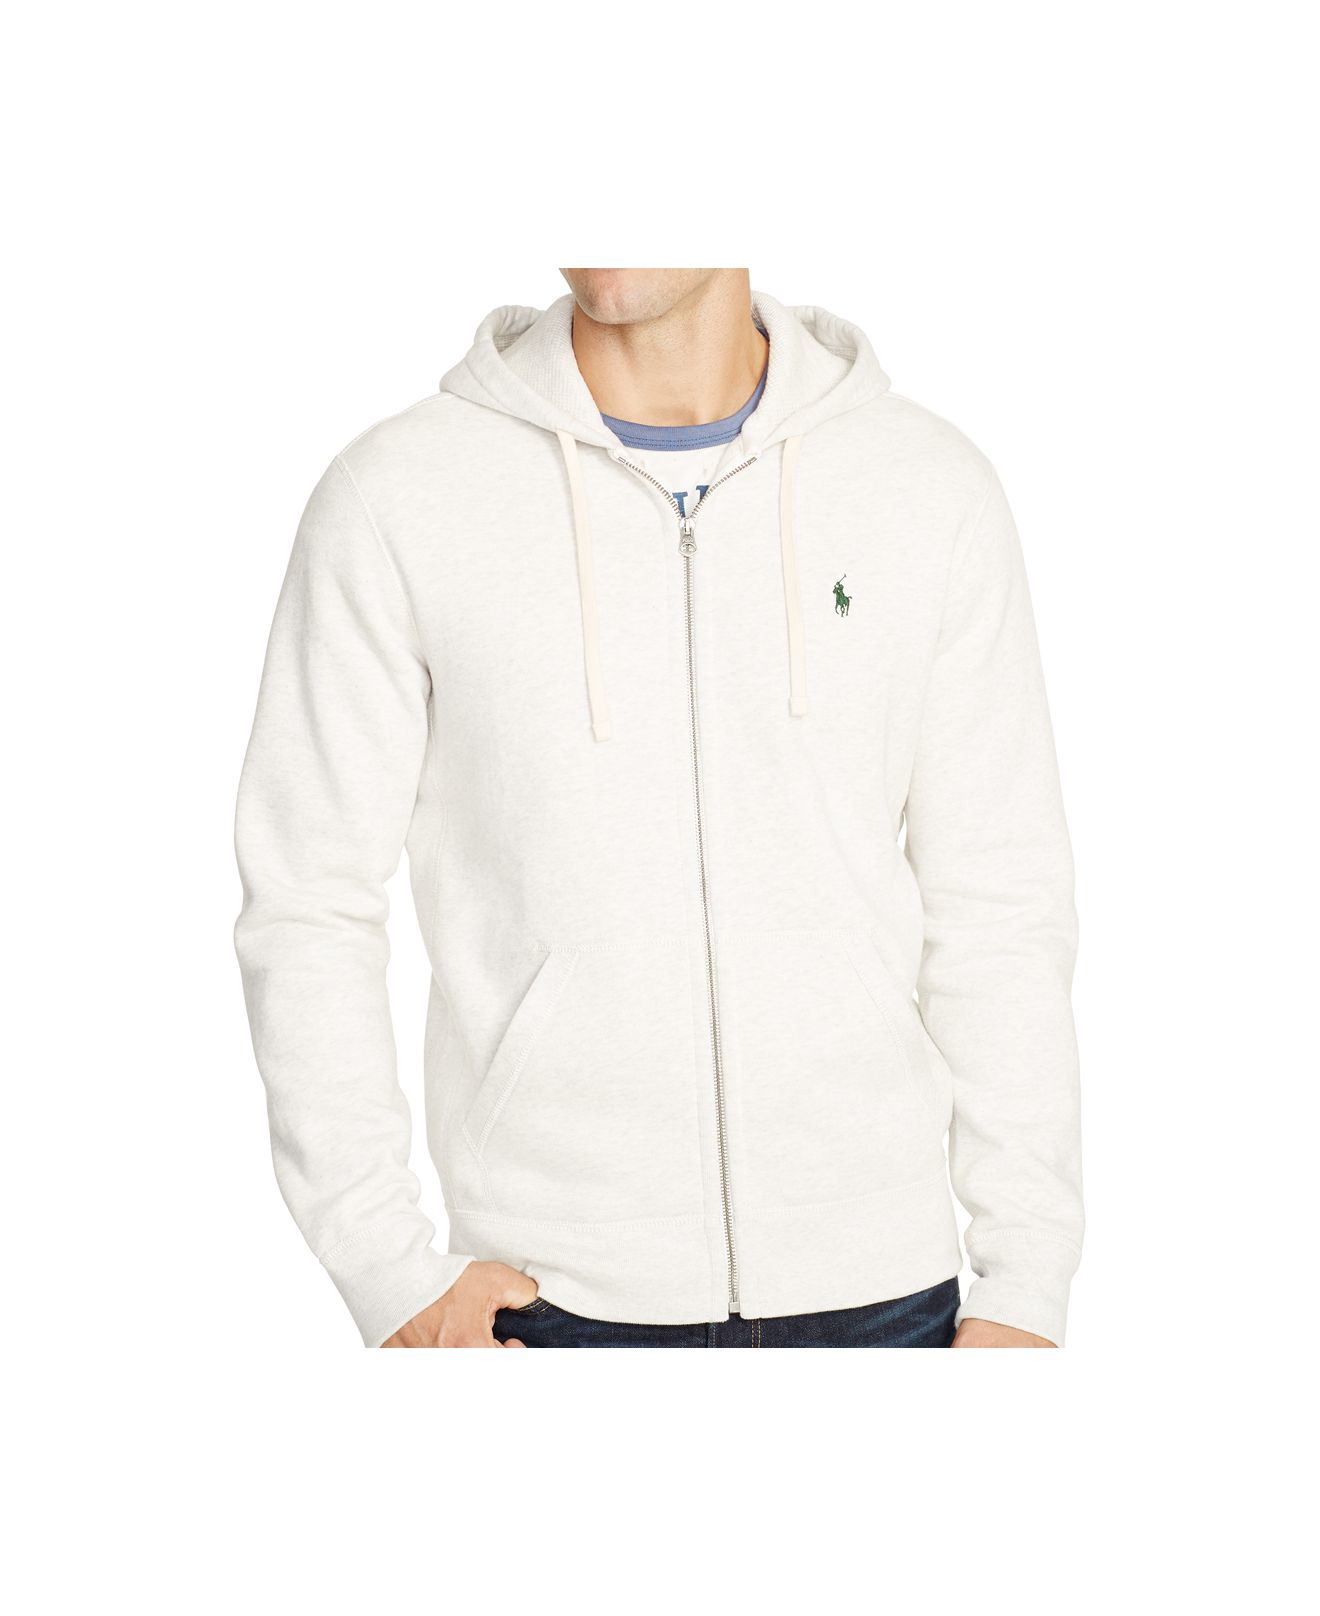 Lyst - Polo Ralph Lauren Full-zip Hoodie in White for Men